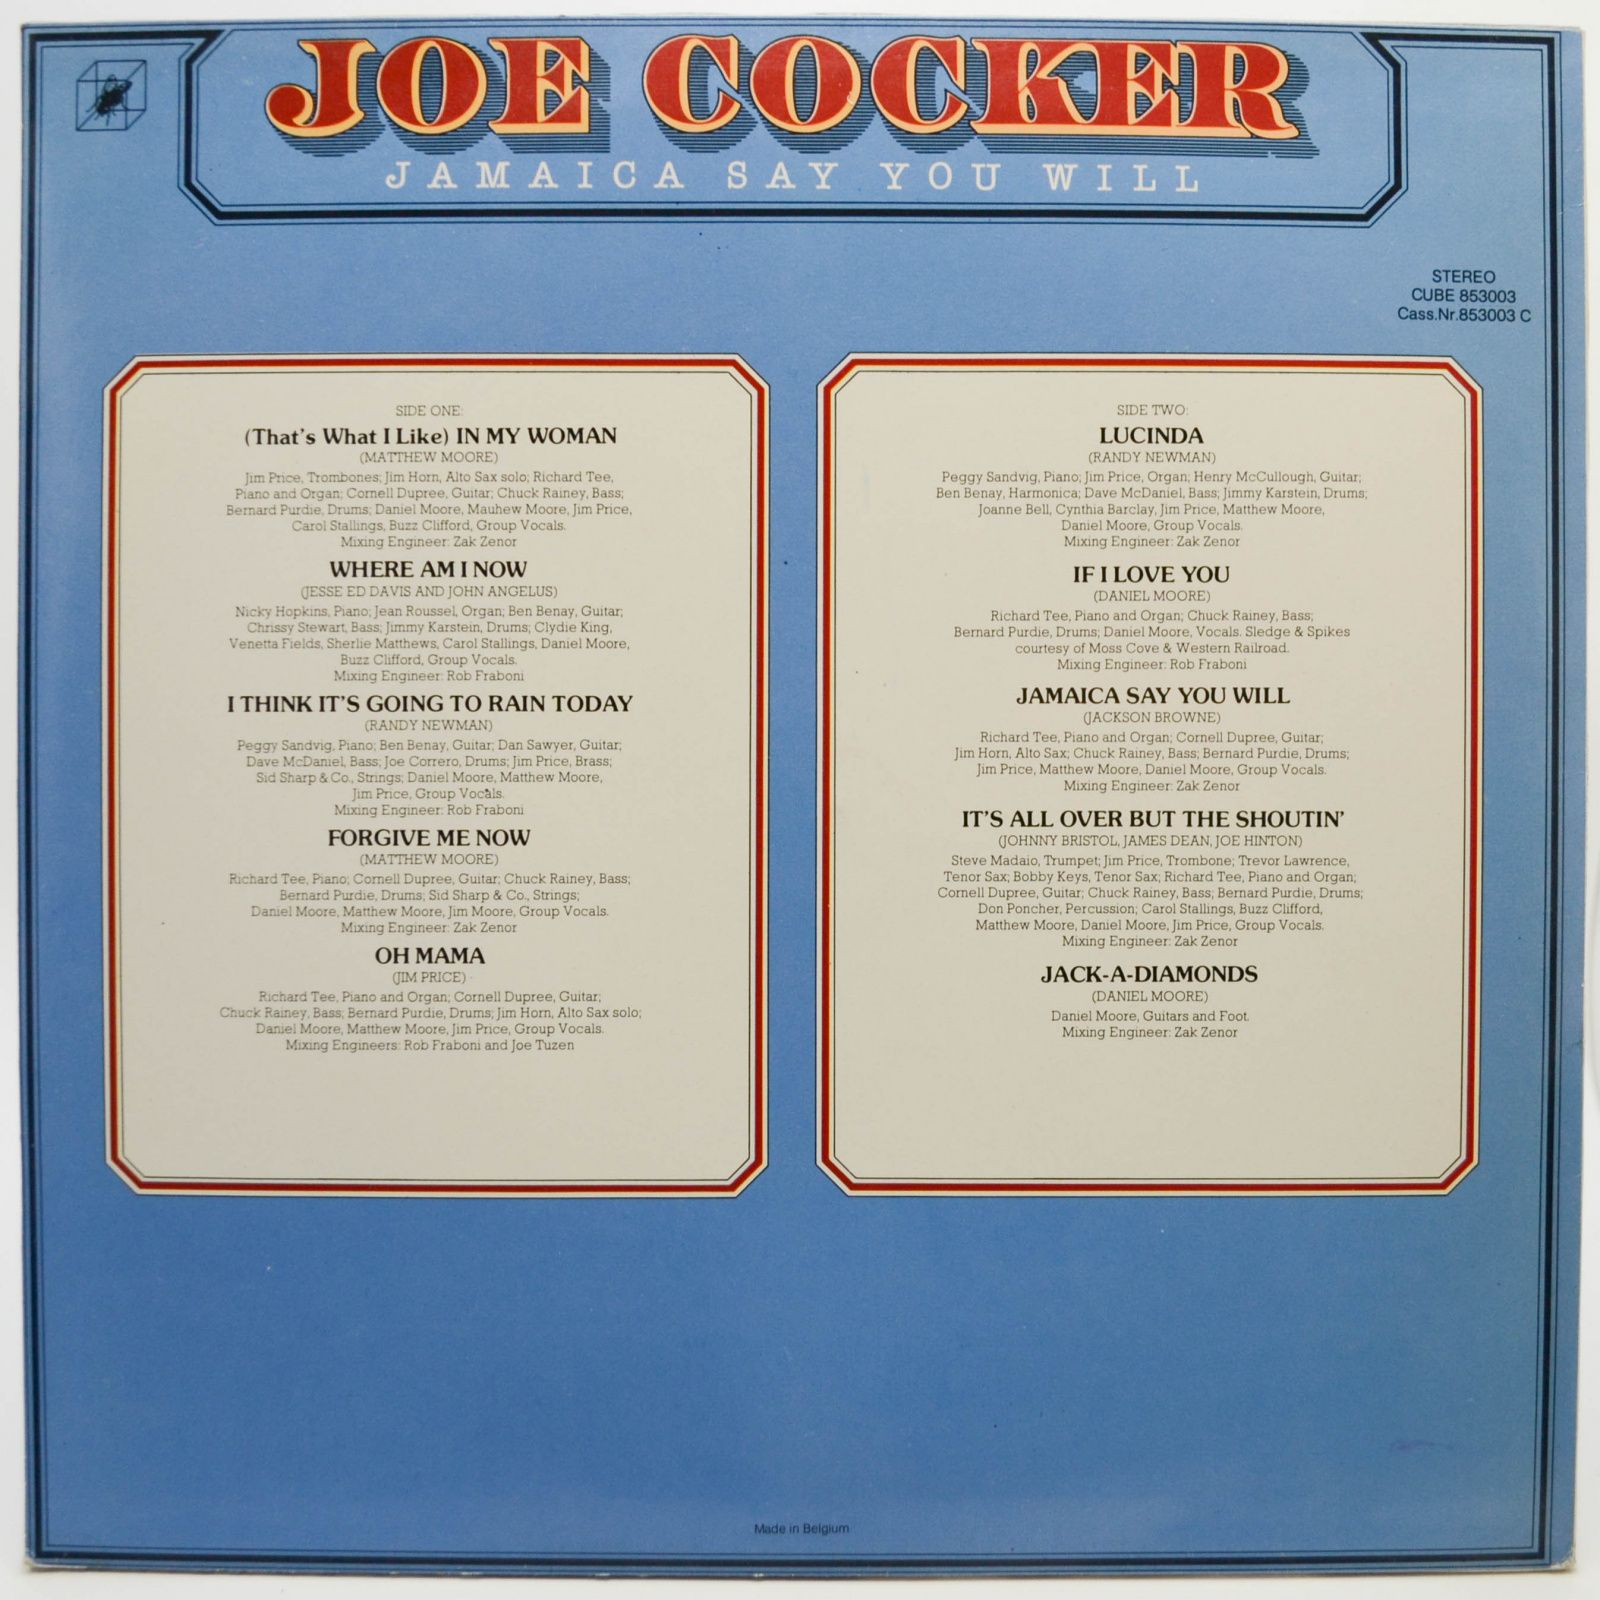 Joe Cocker — Jamaica Say You Will, 1975